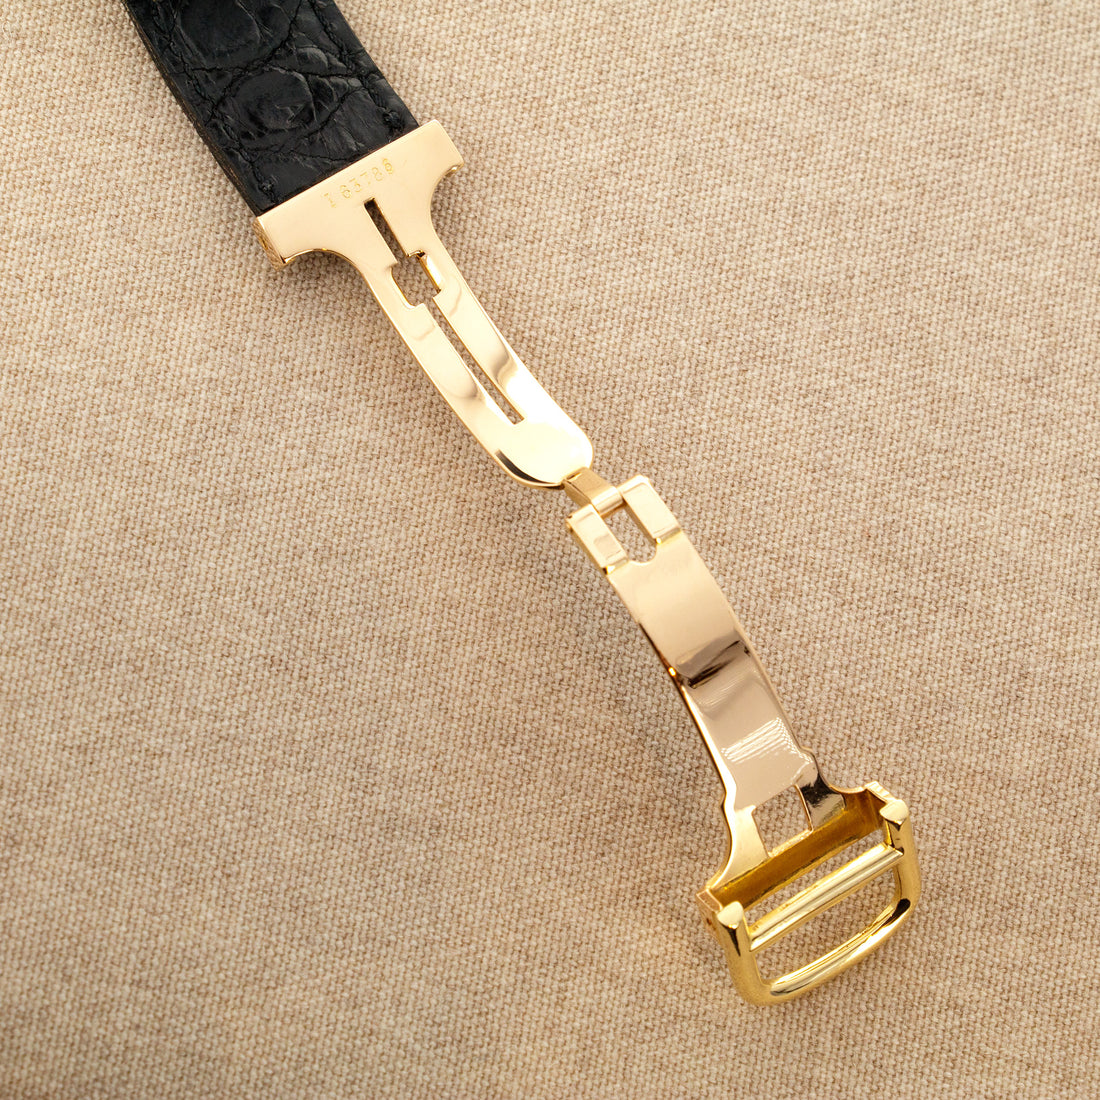 Cartier Yellow Gold Tank Louis Ref. 8110 on A Bracelet